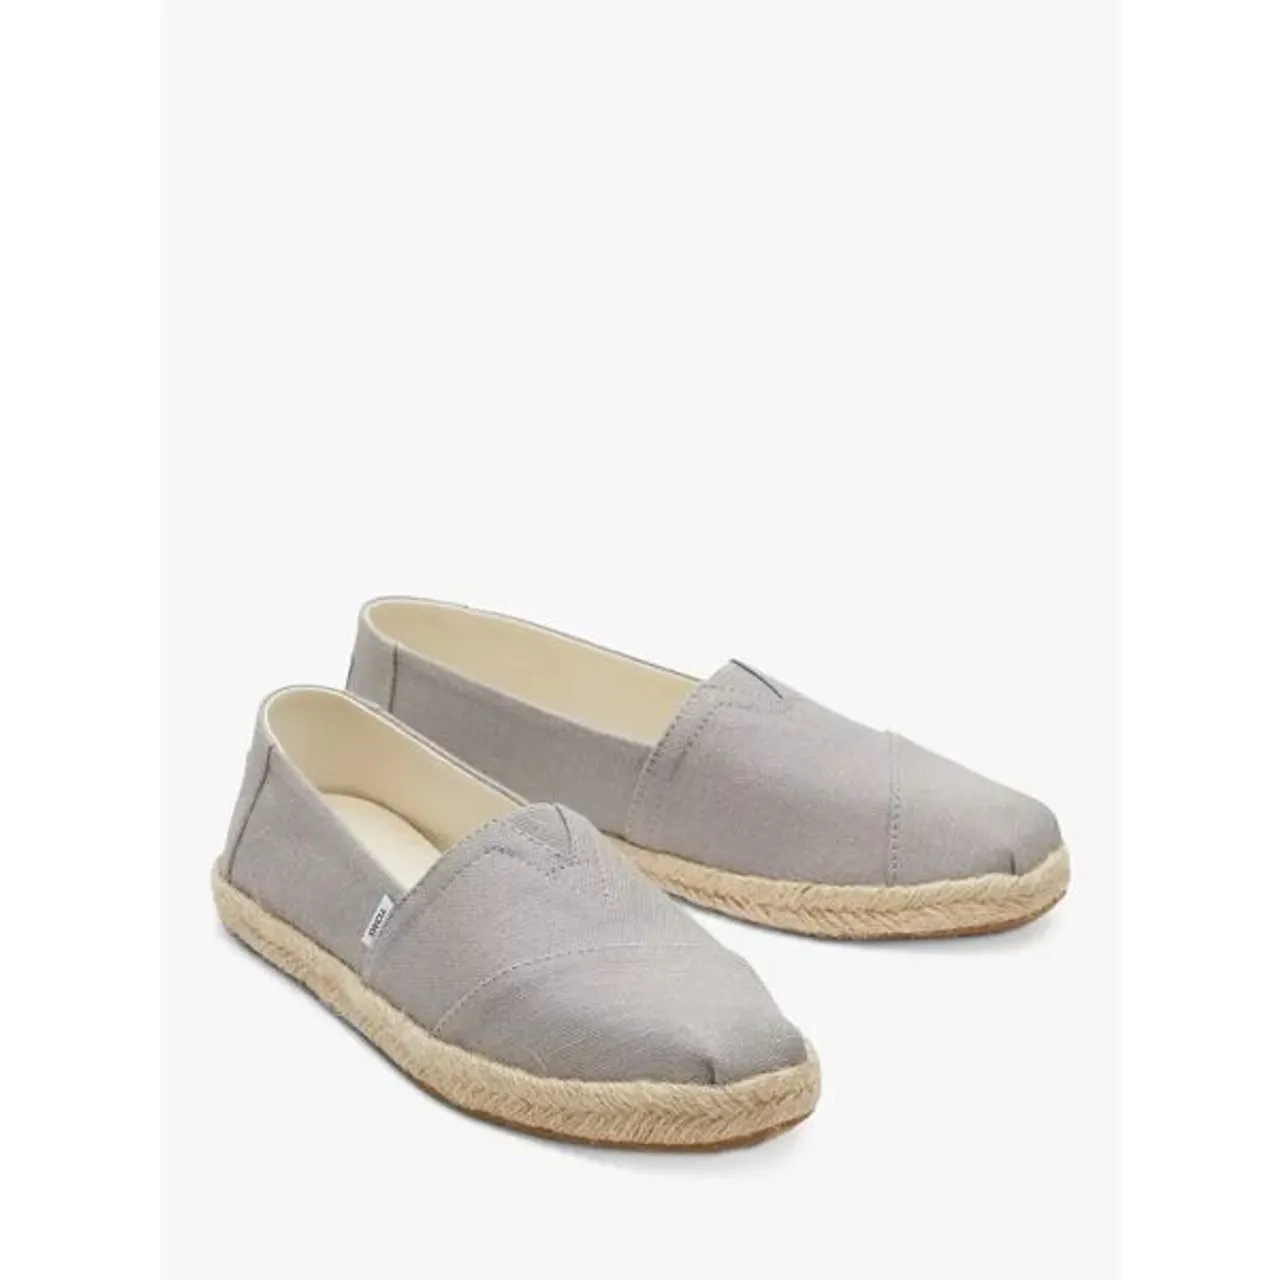 TOMS Alpargata Rope Espadrille Shoes - Grey - Female